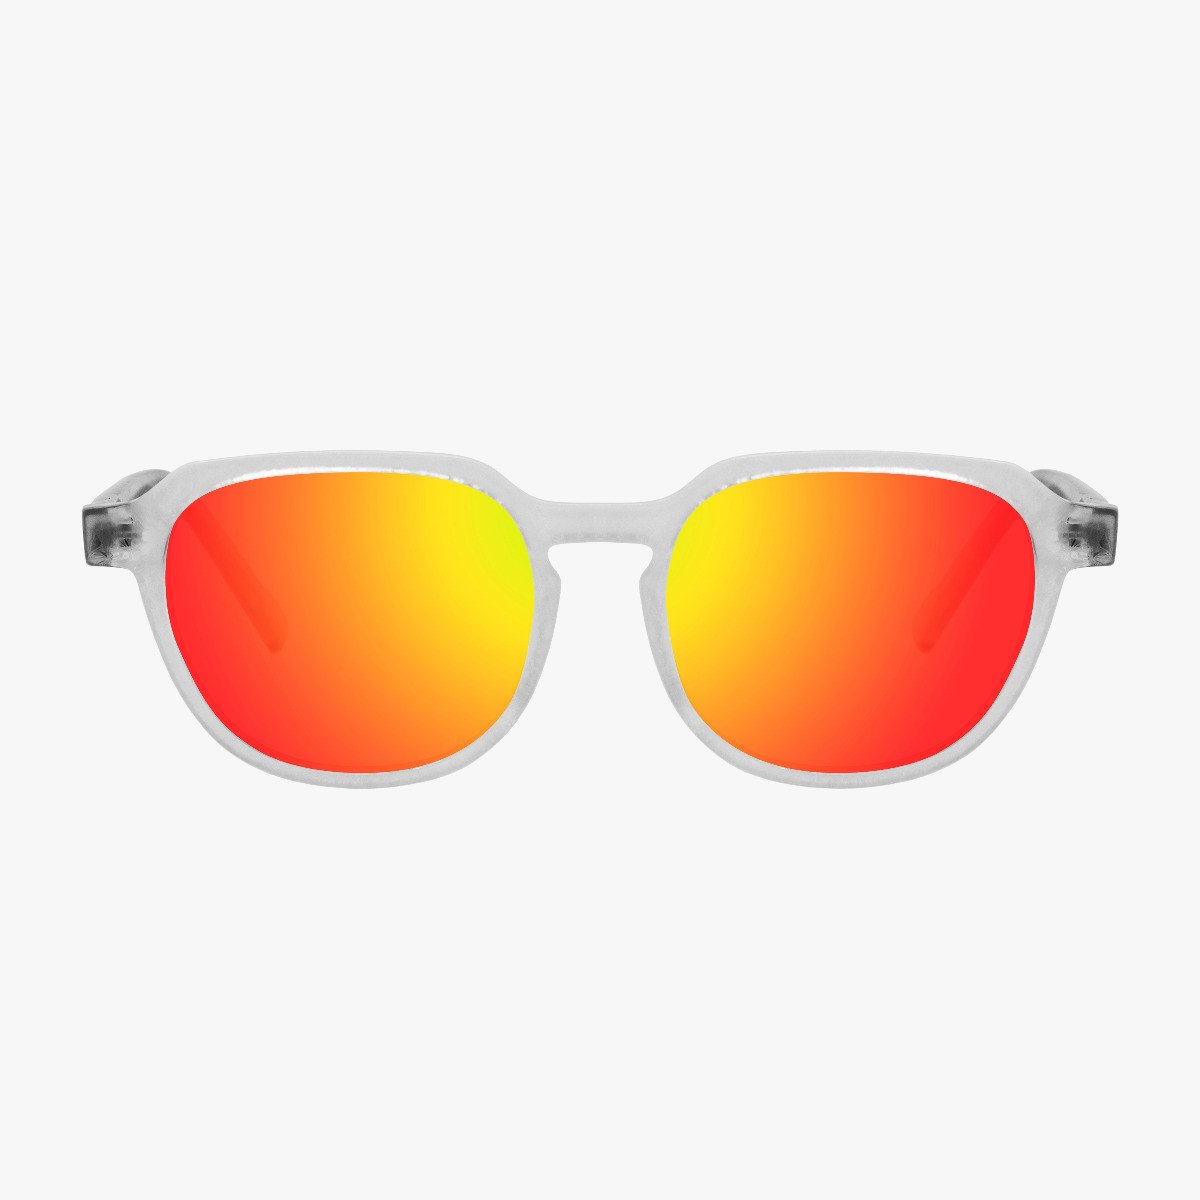 Scicon Sports | Vertex Lifestyle Sunglasses - Frozen Matt, Multimirror Red Lens - EY220605